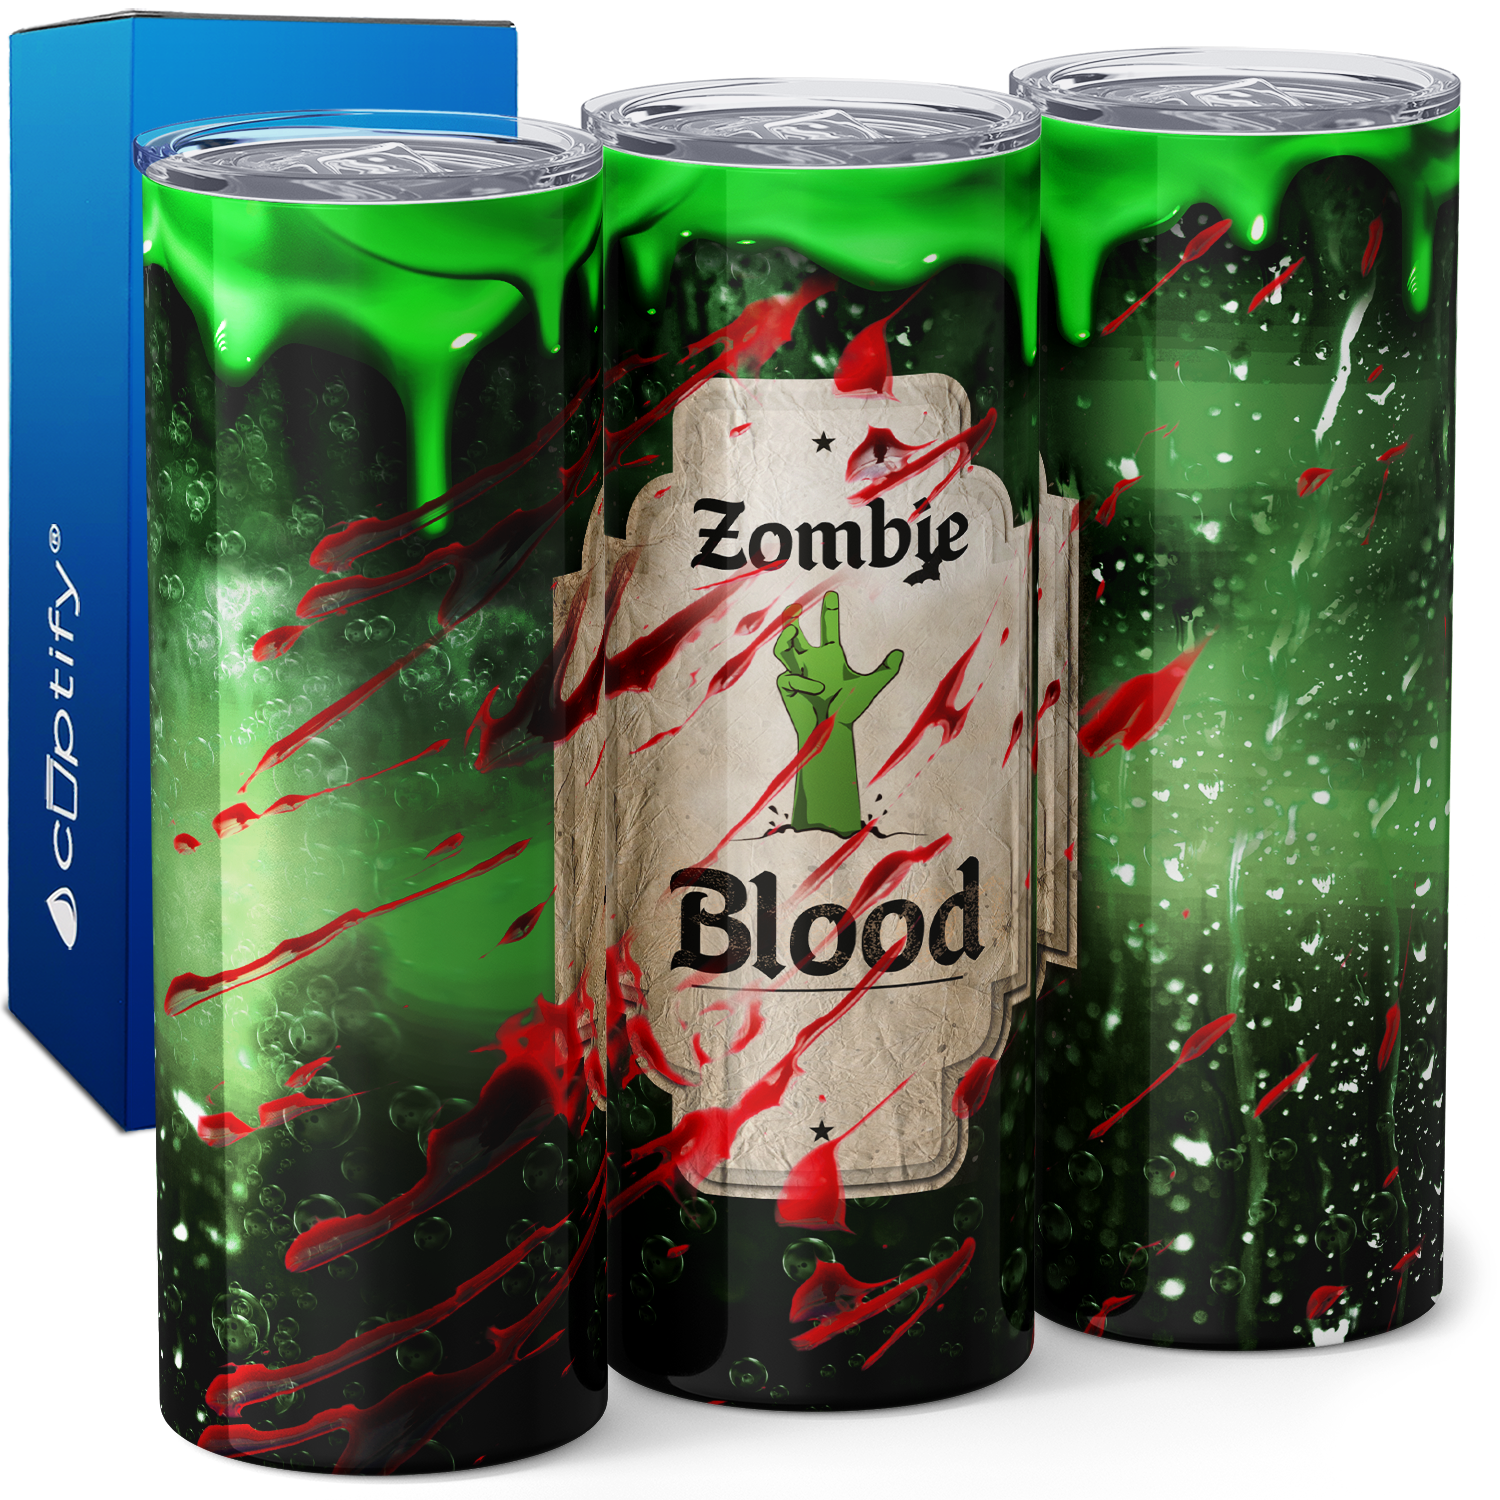 Zombie Blood Potion 20oz Skinny Tumbler